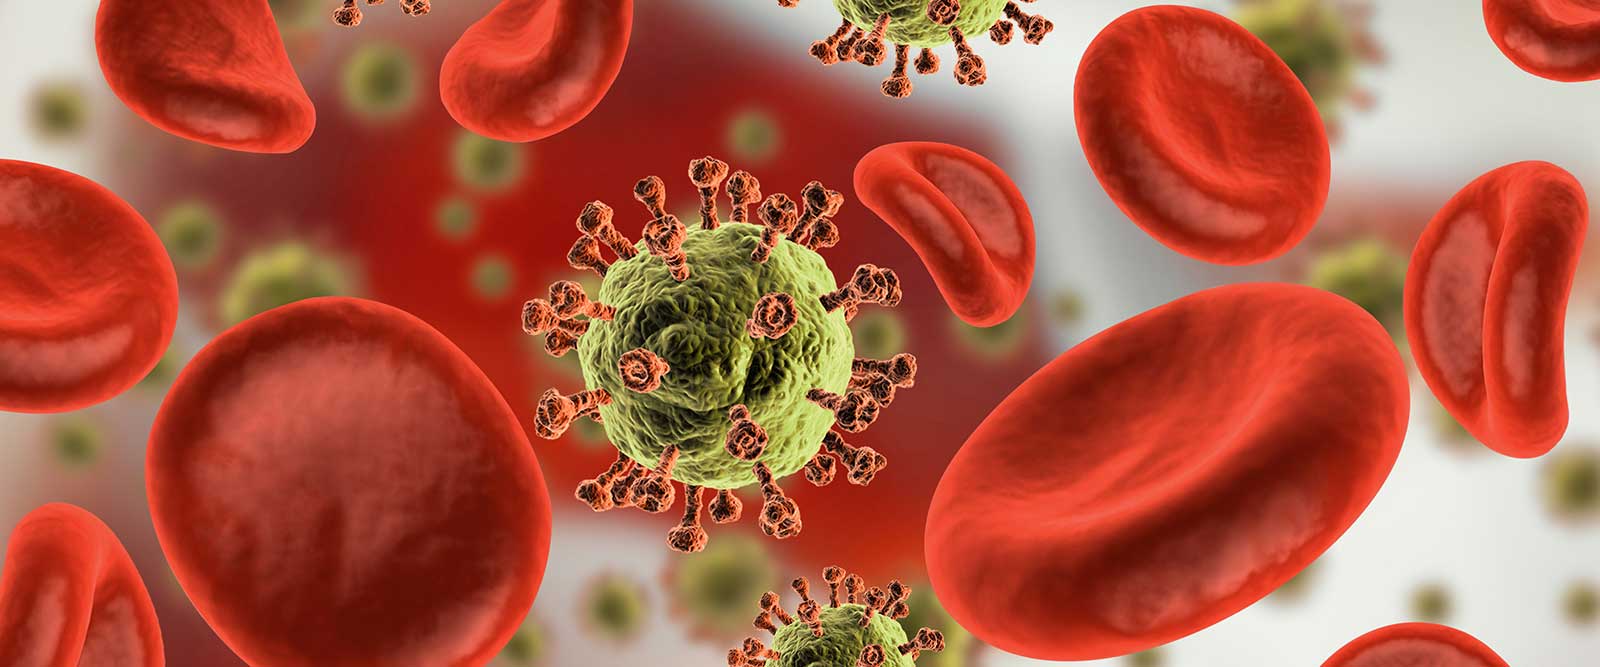 bloodborne-pathogens-environment-health-and-safety